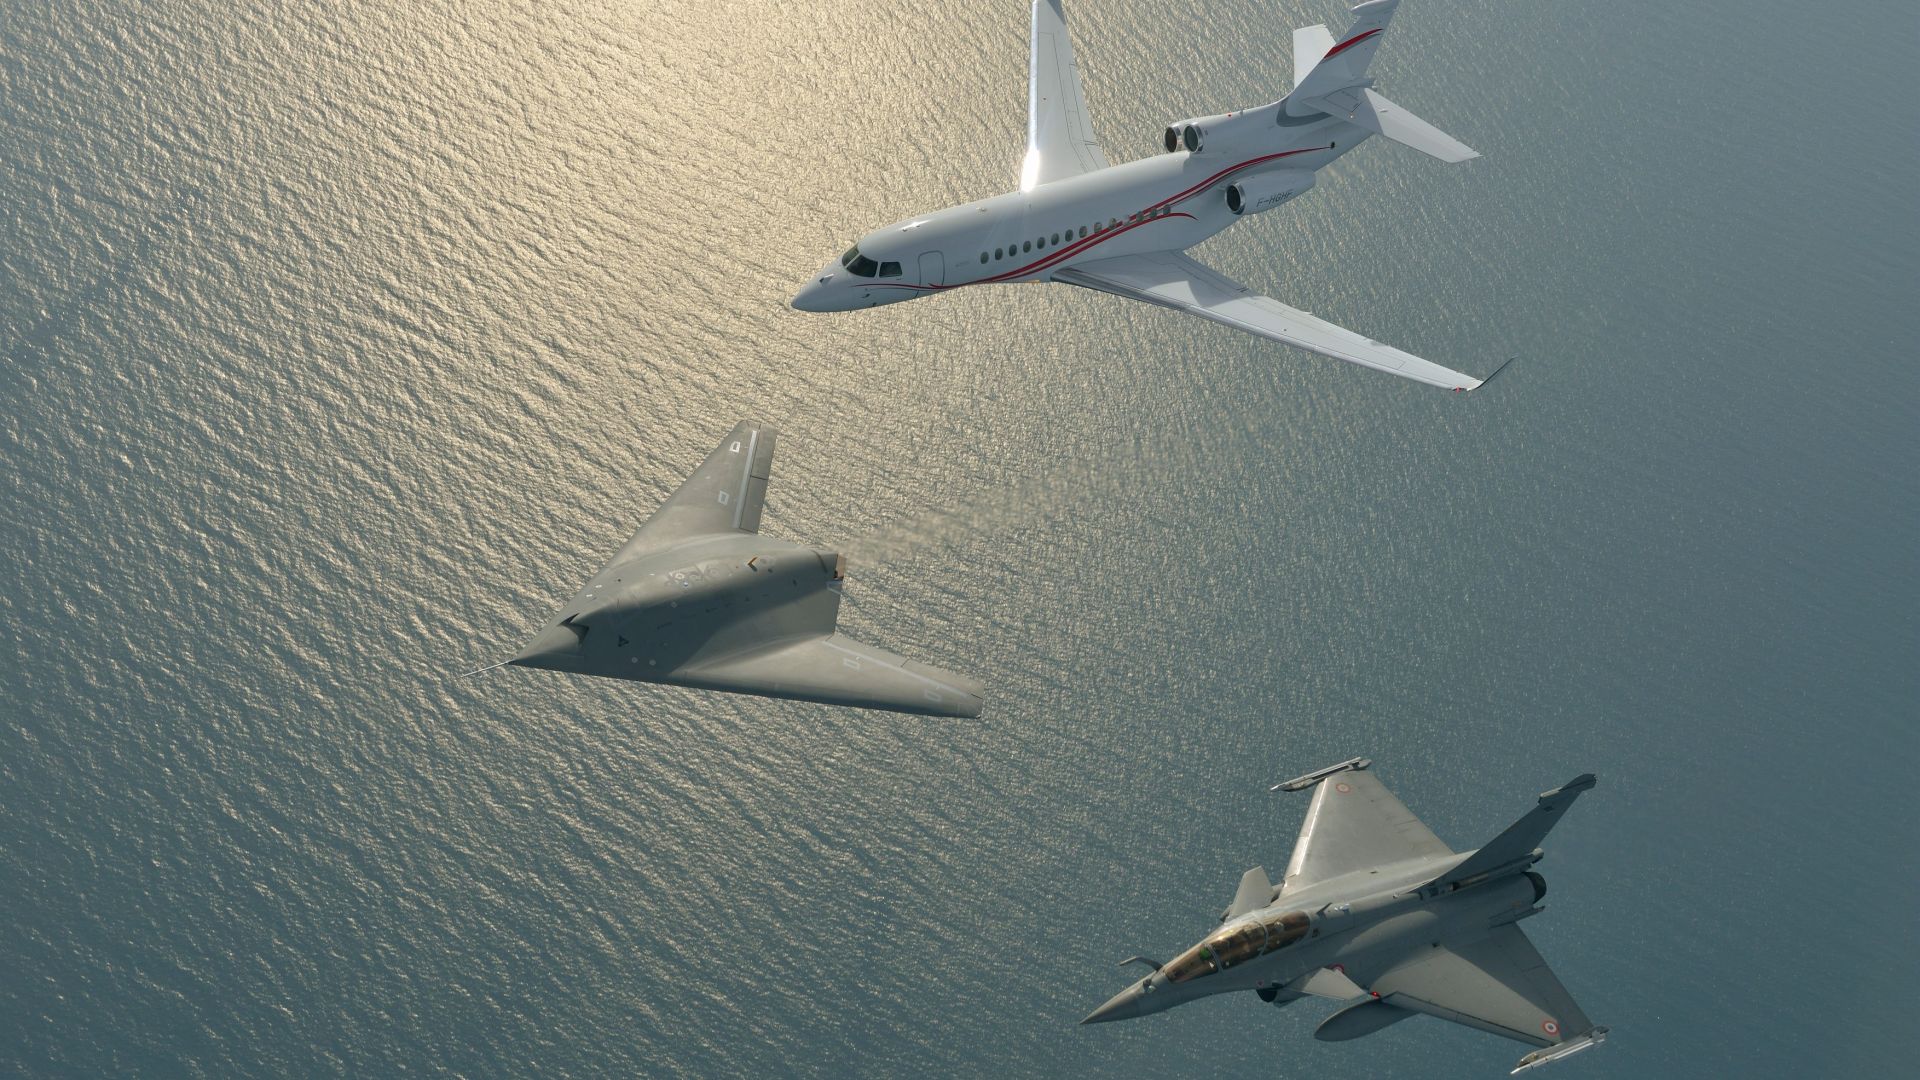 Dassault nEUROn, Neuron, Rafale, Falcon 7X, British army, Drone, Unmanned Combat Air Vehicle, US Army, U.S. Air Force, aircraft (horizontal)